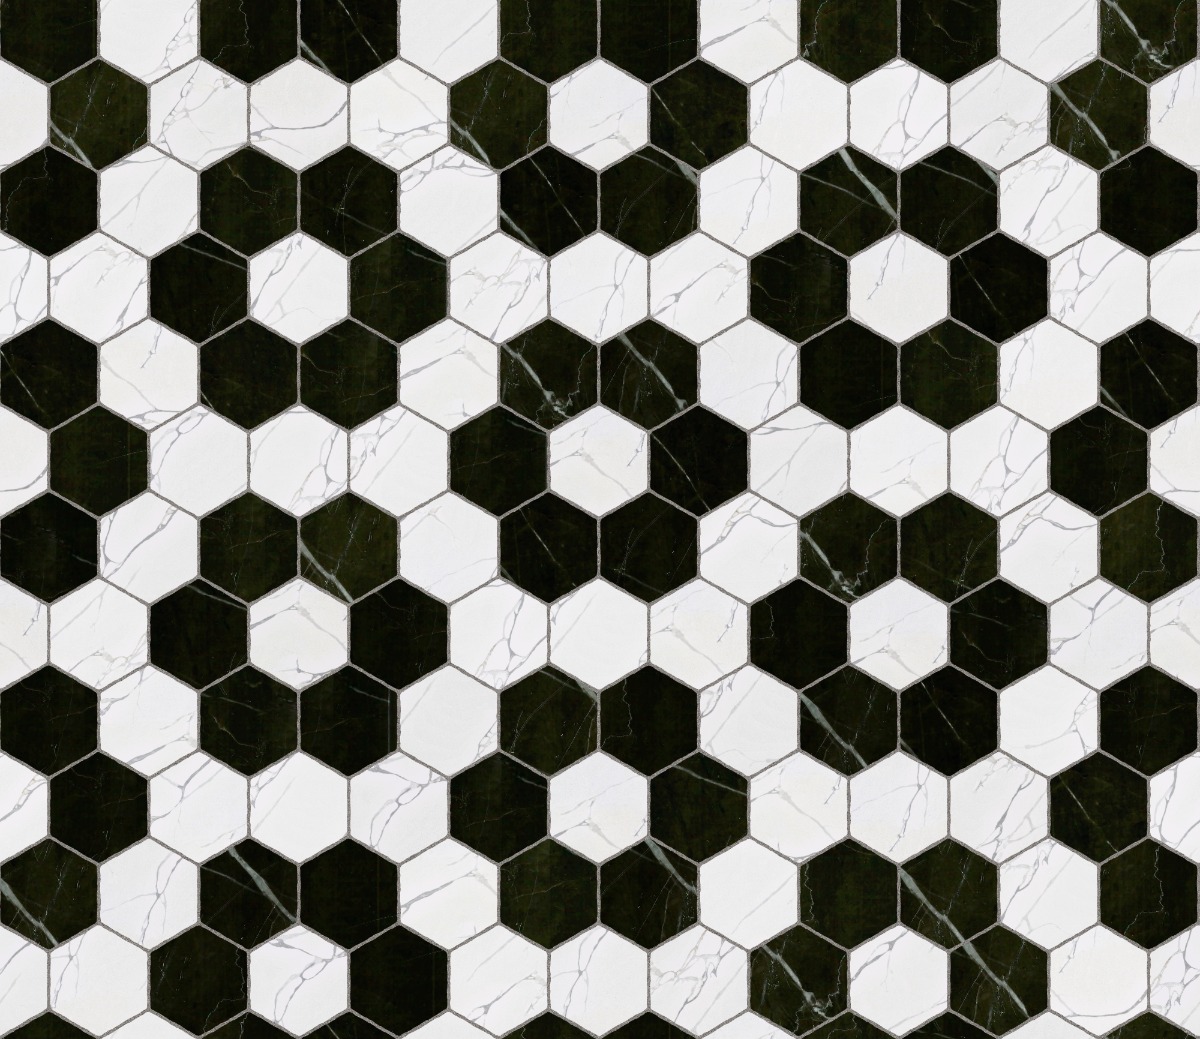 A seamless stone texture with calacatta vena blocks arranged in a Hexagonal pattern